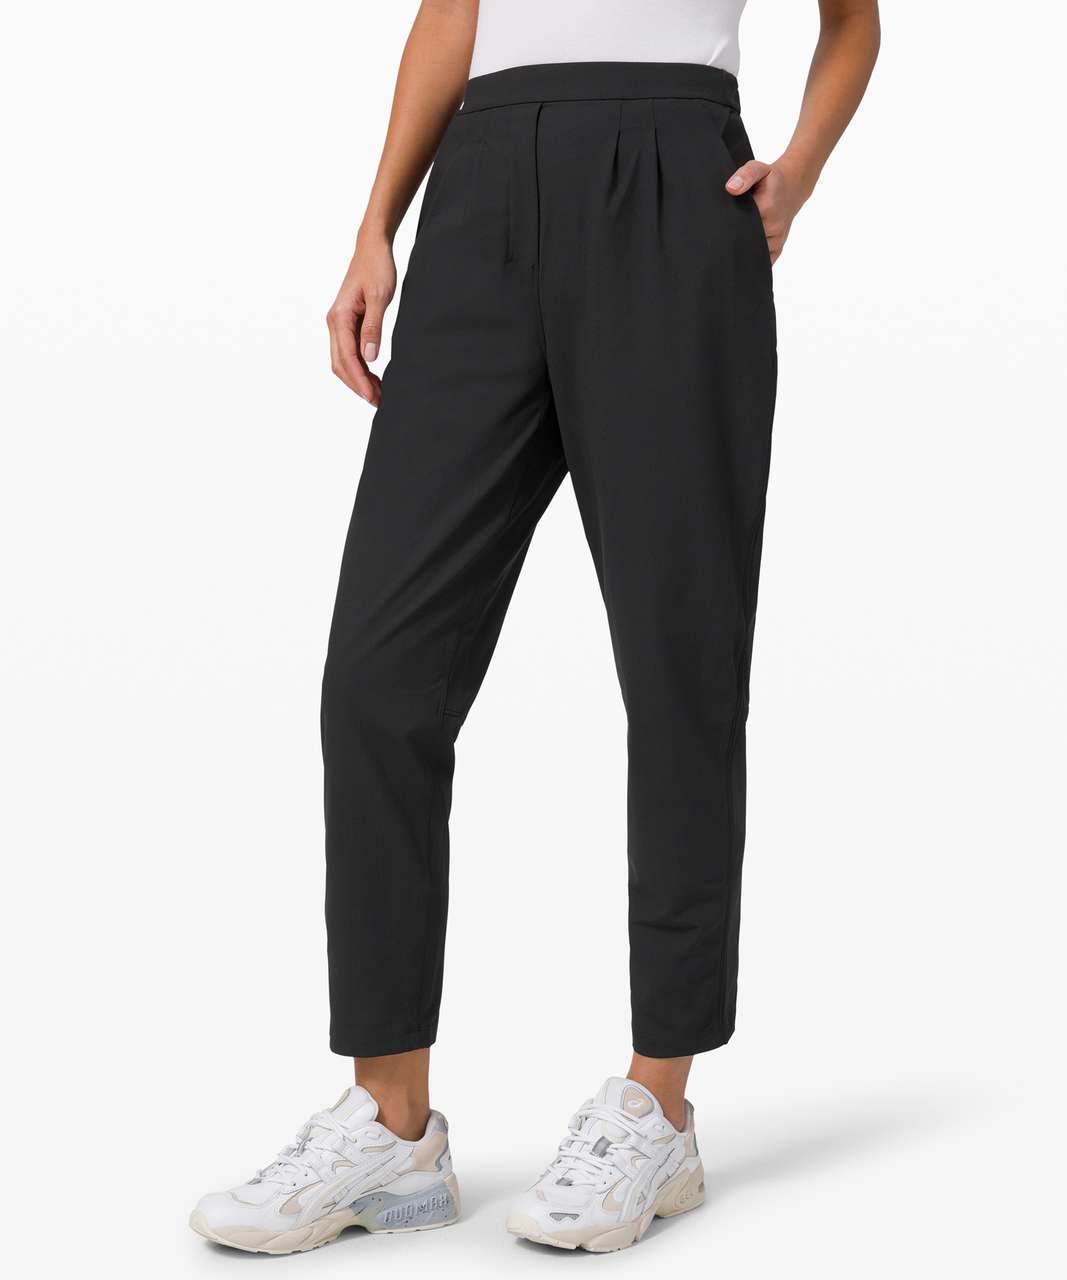 https://storage.googleapis.com/lulu-fanatics/product/53402/1280/lululemon-essential-high-rise-trouser-black-0001-303445.jpg